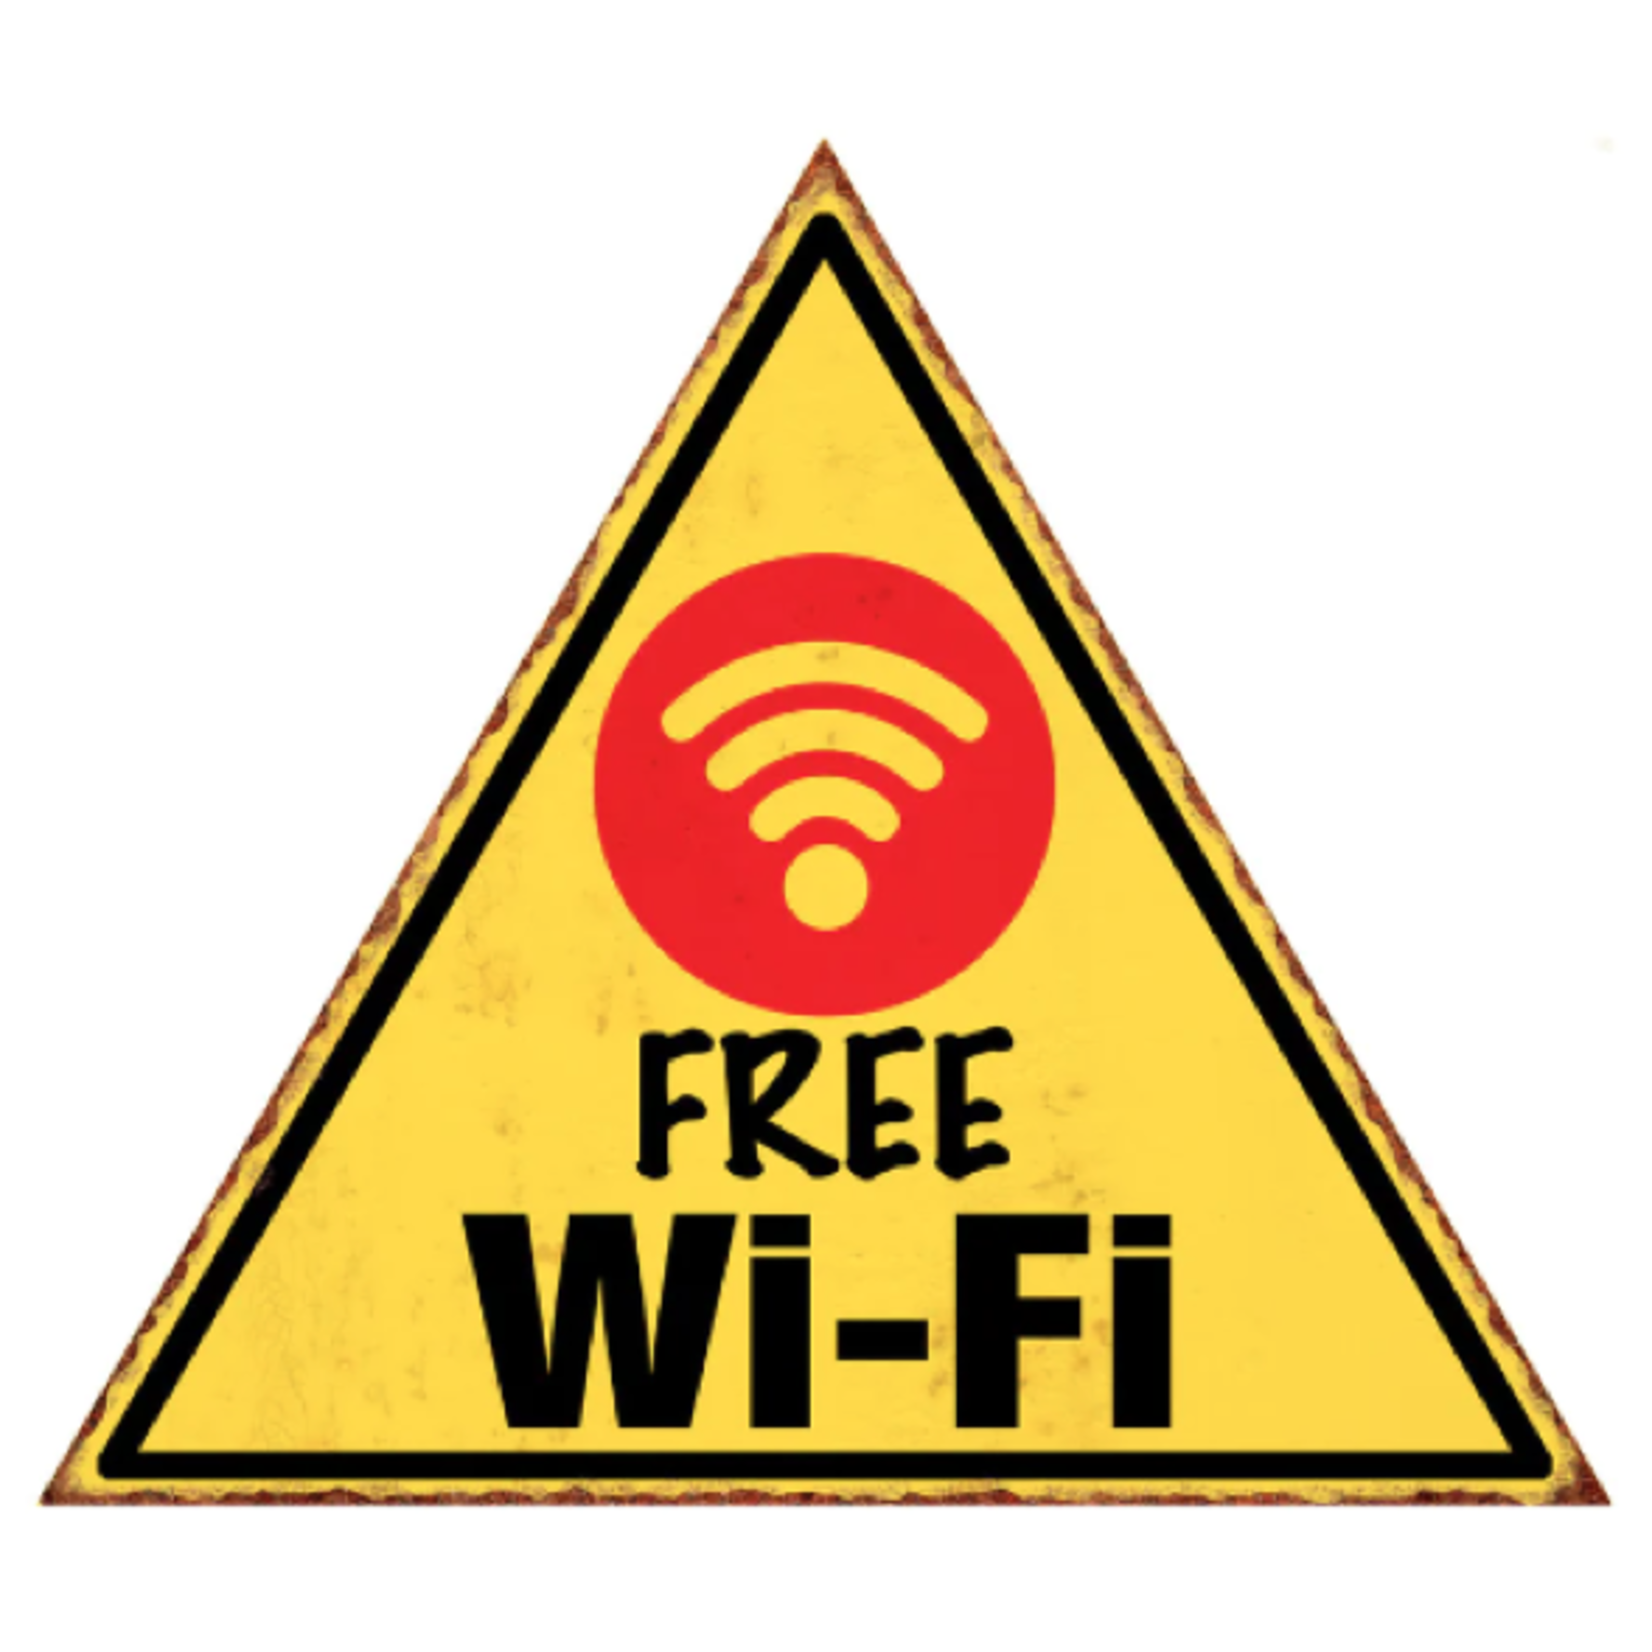 Free Wifi Warning Sign